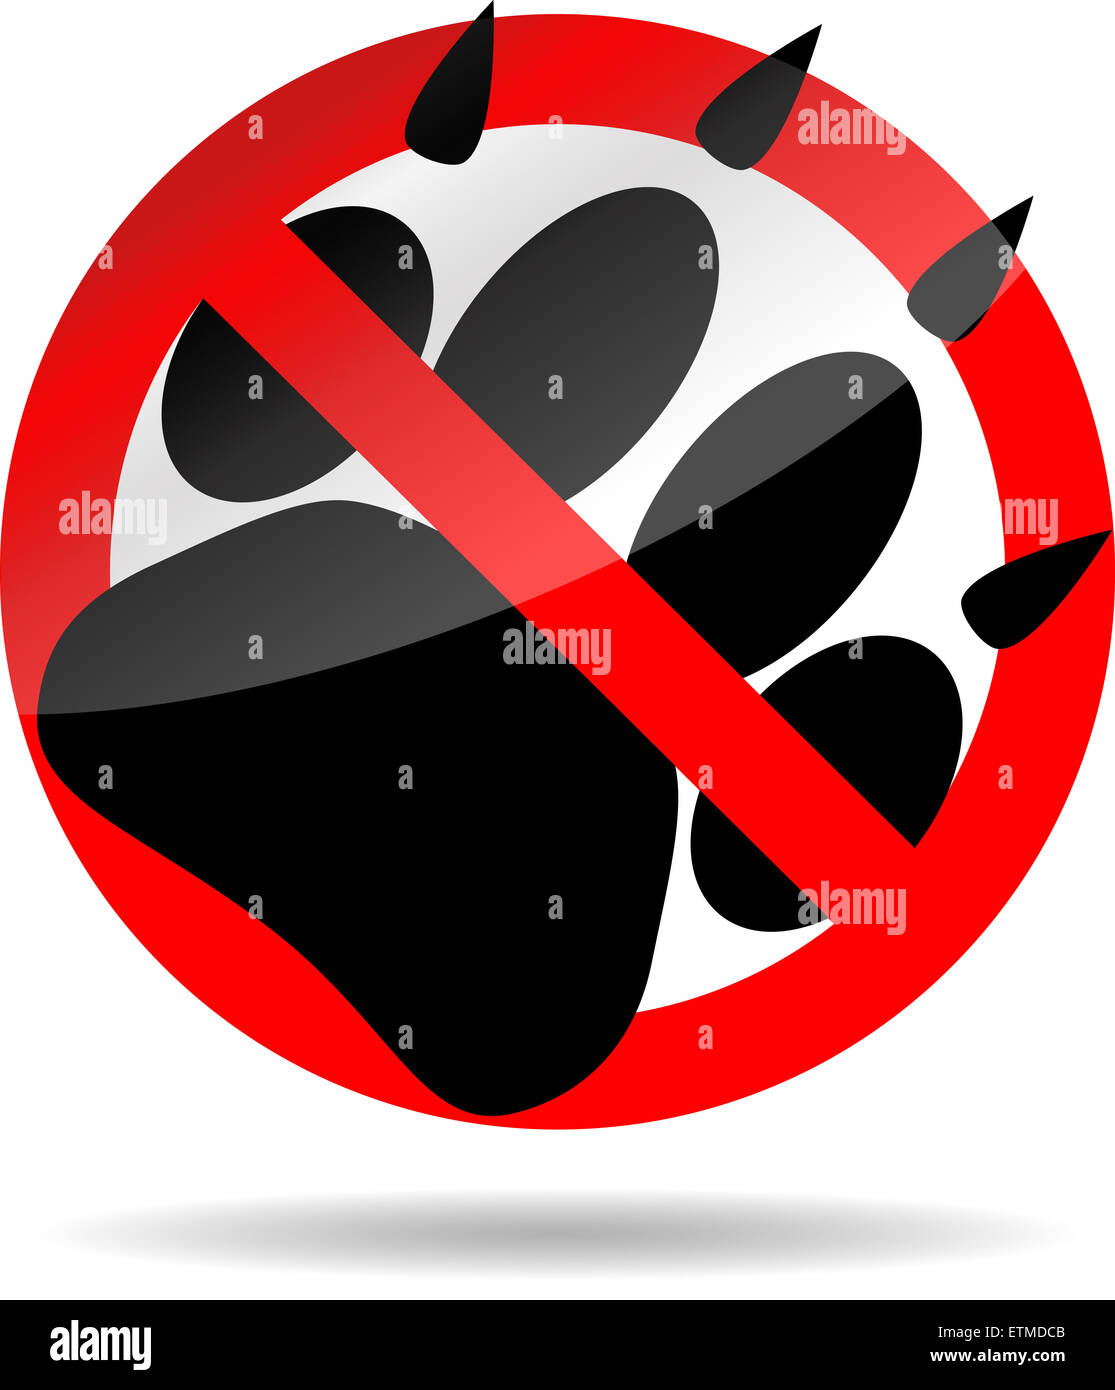 Ban foot print animal. Pet paw, print dog, wildlife cat or tiger, vector graphic illustration Stock Photo